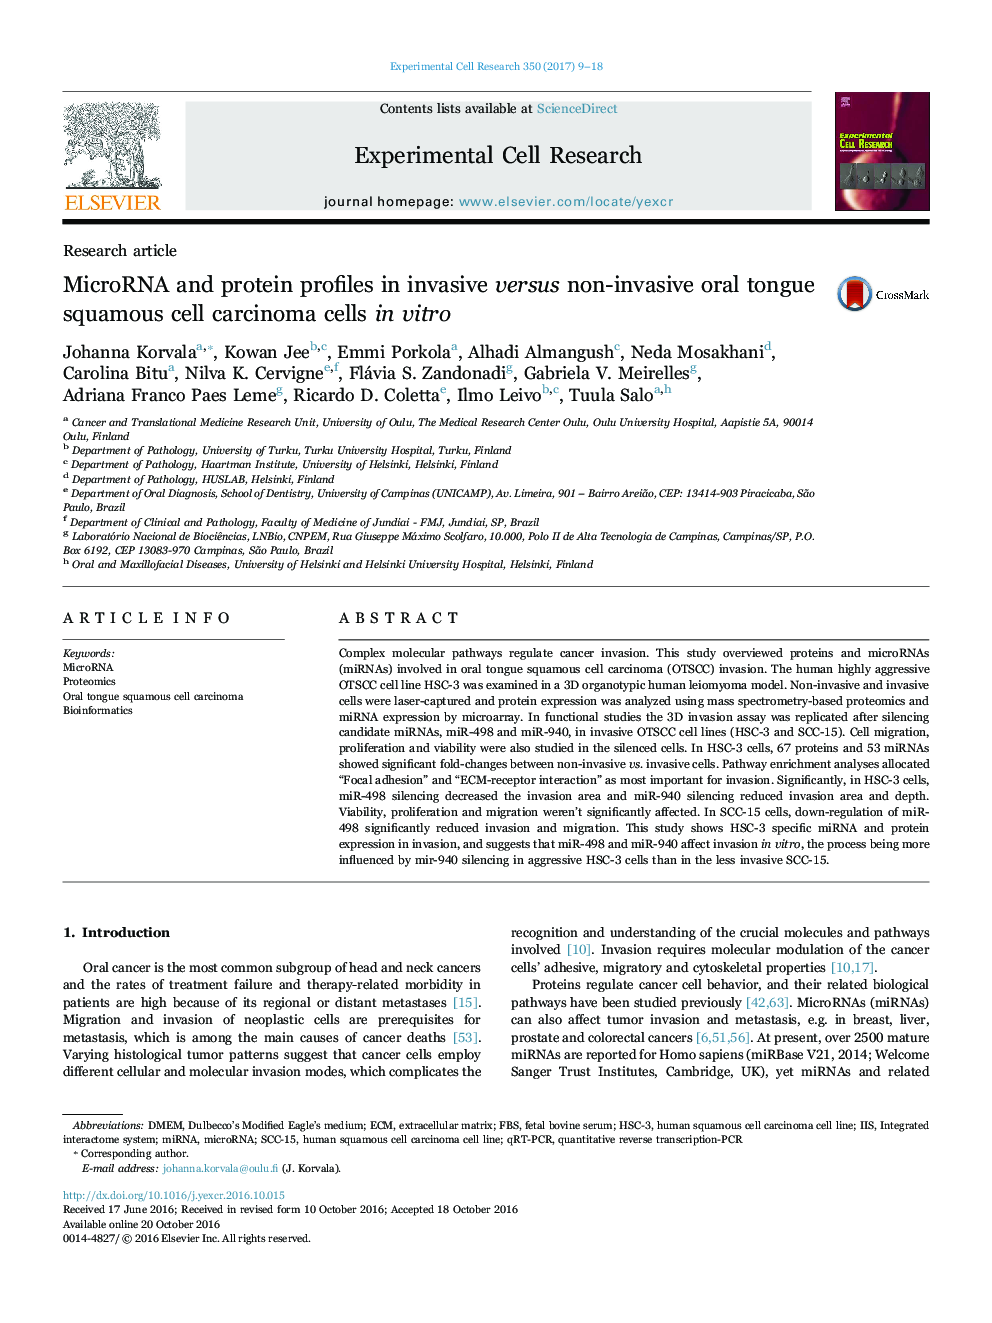 Research articleMicroRNA and protein profiles in invasive versus non-invasive oral tongue squamous cell carcinoma cells in vitro